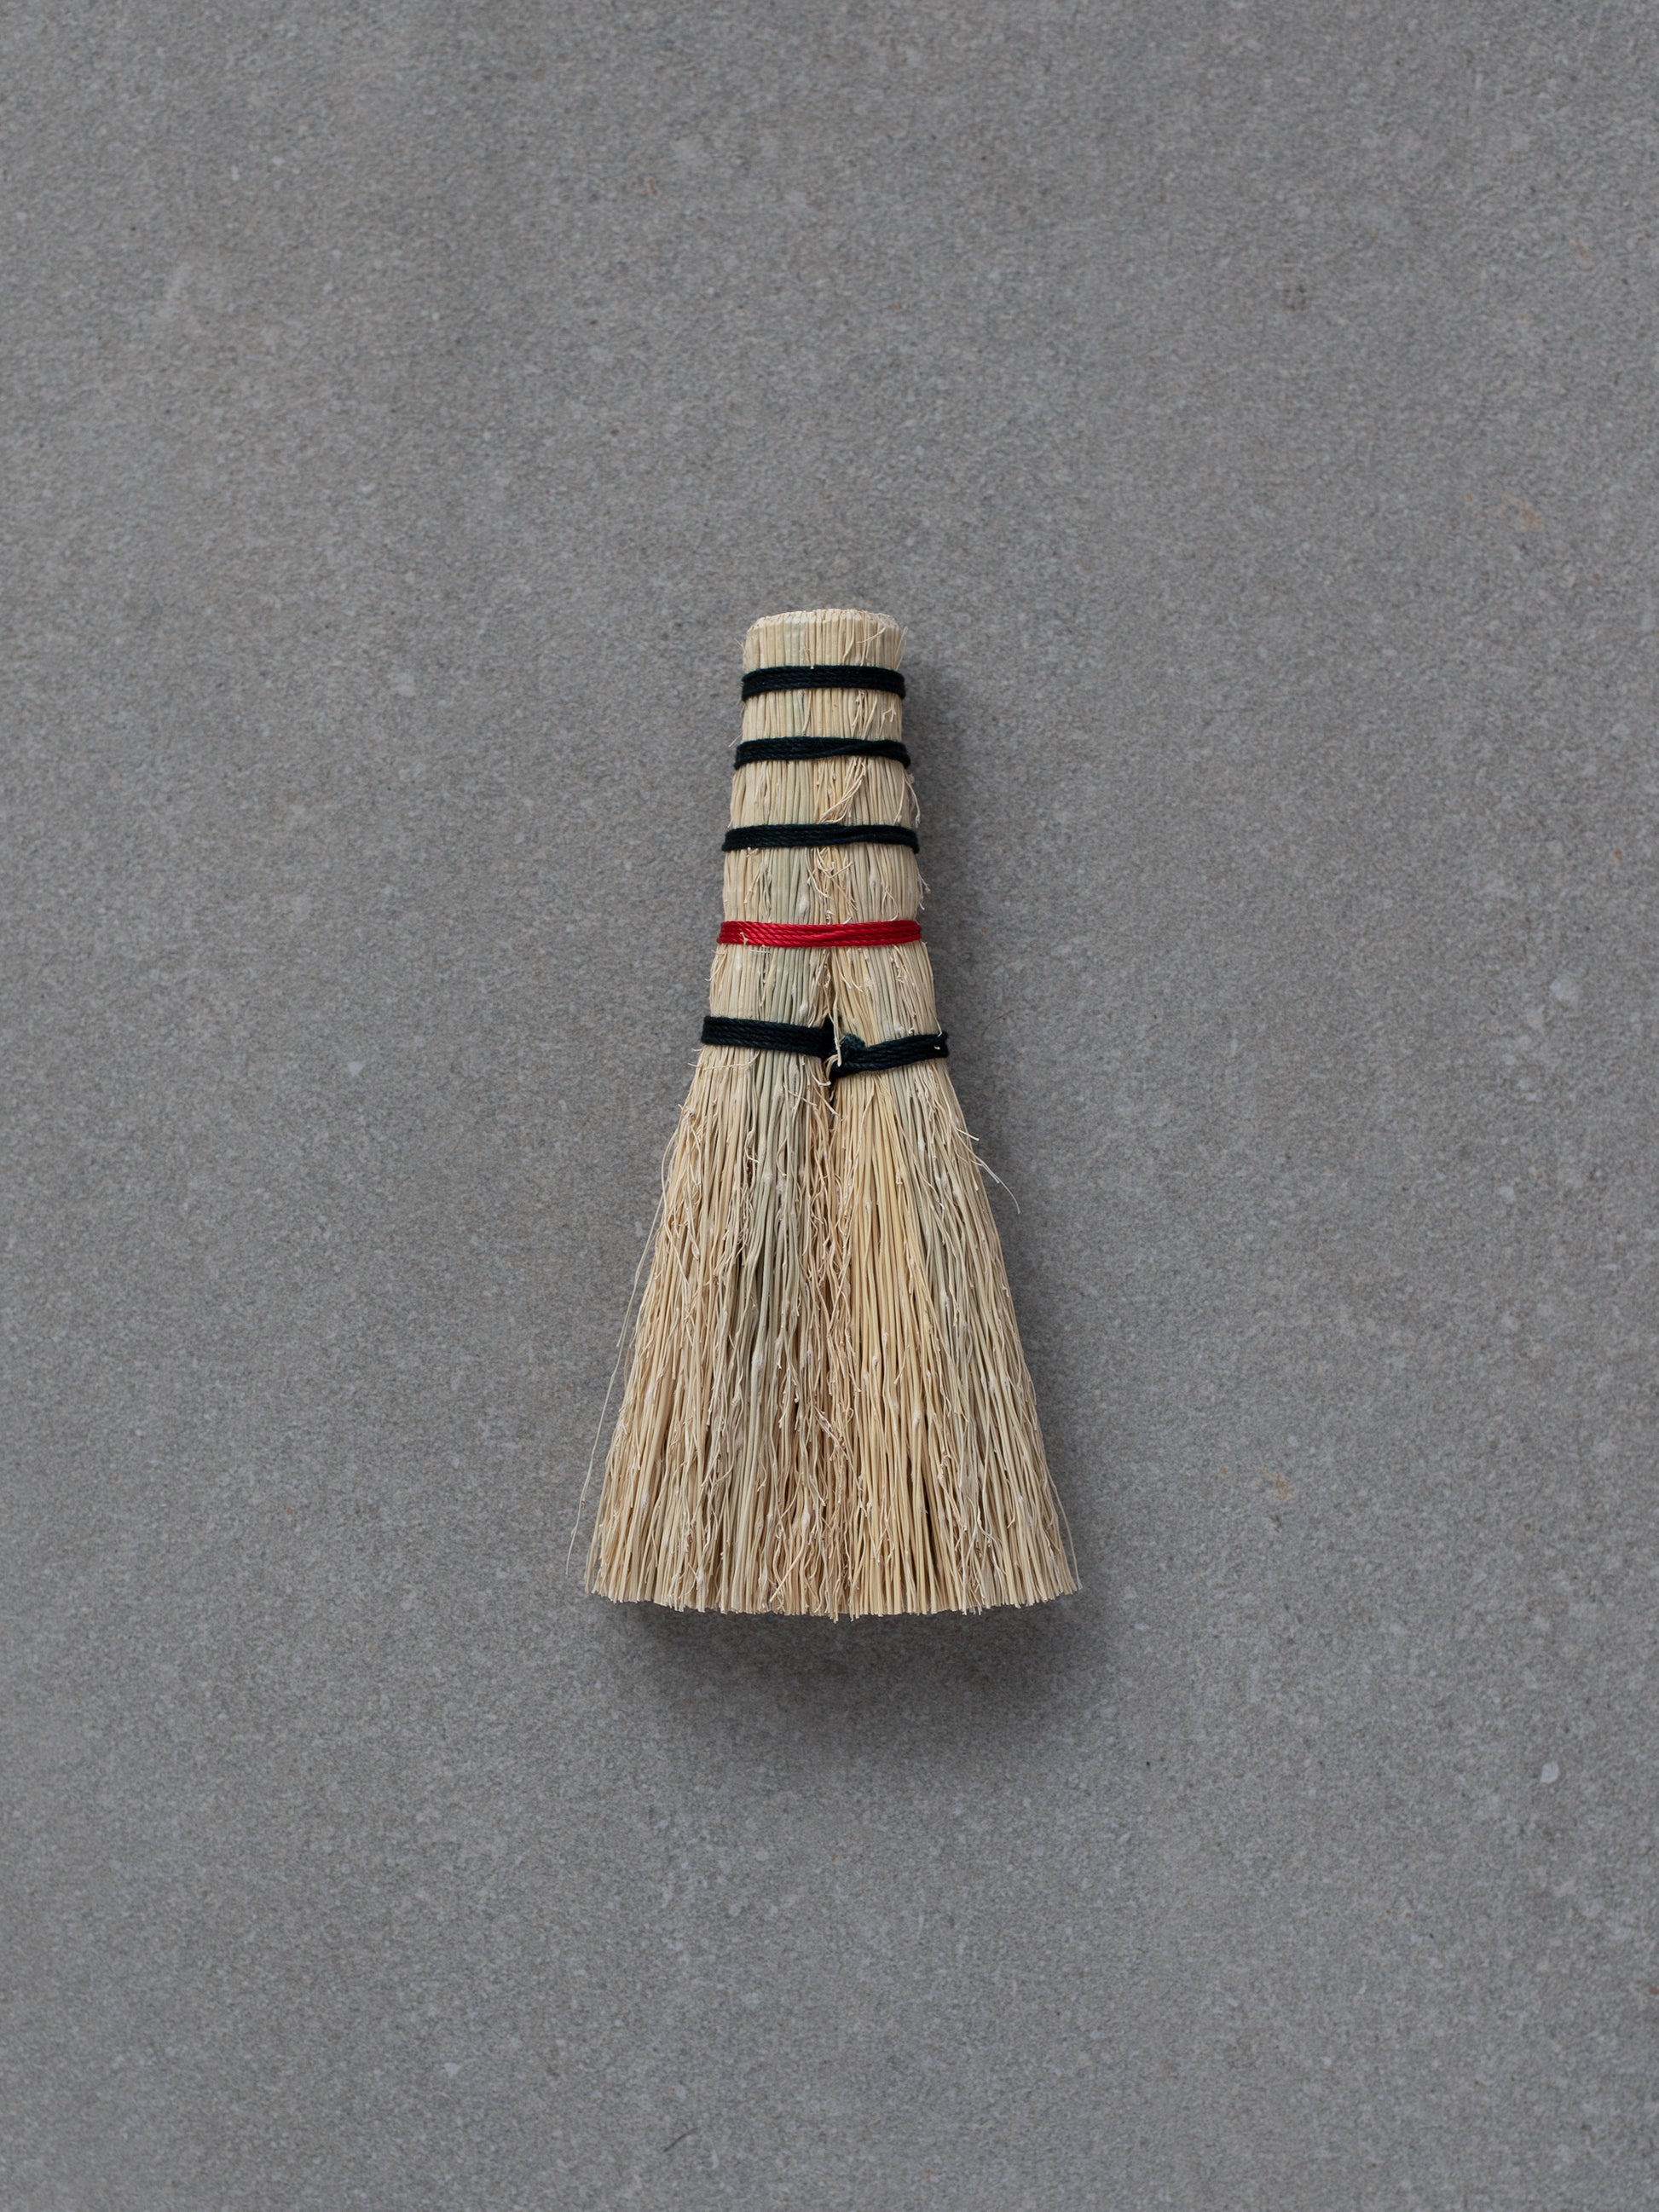 Takada Broom with Short Japanese Cypress Broomstick